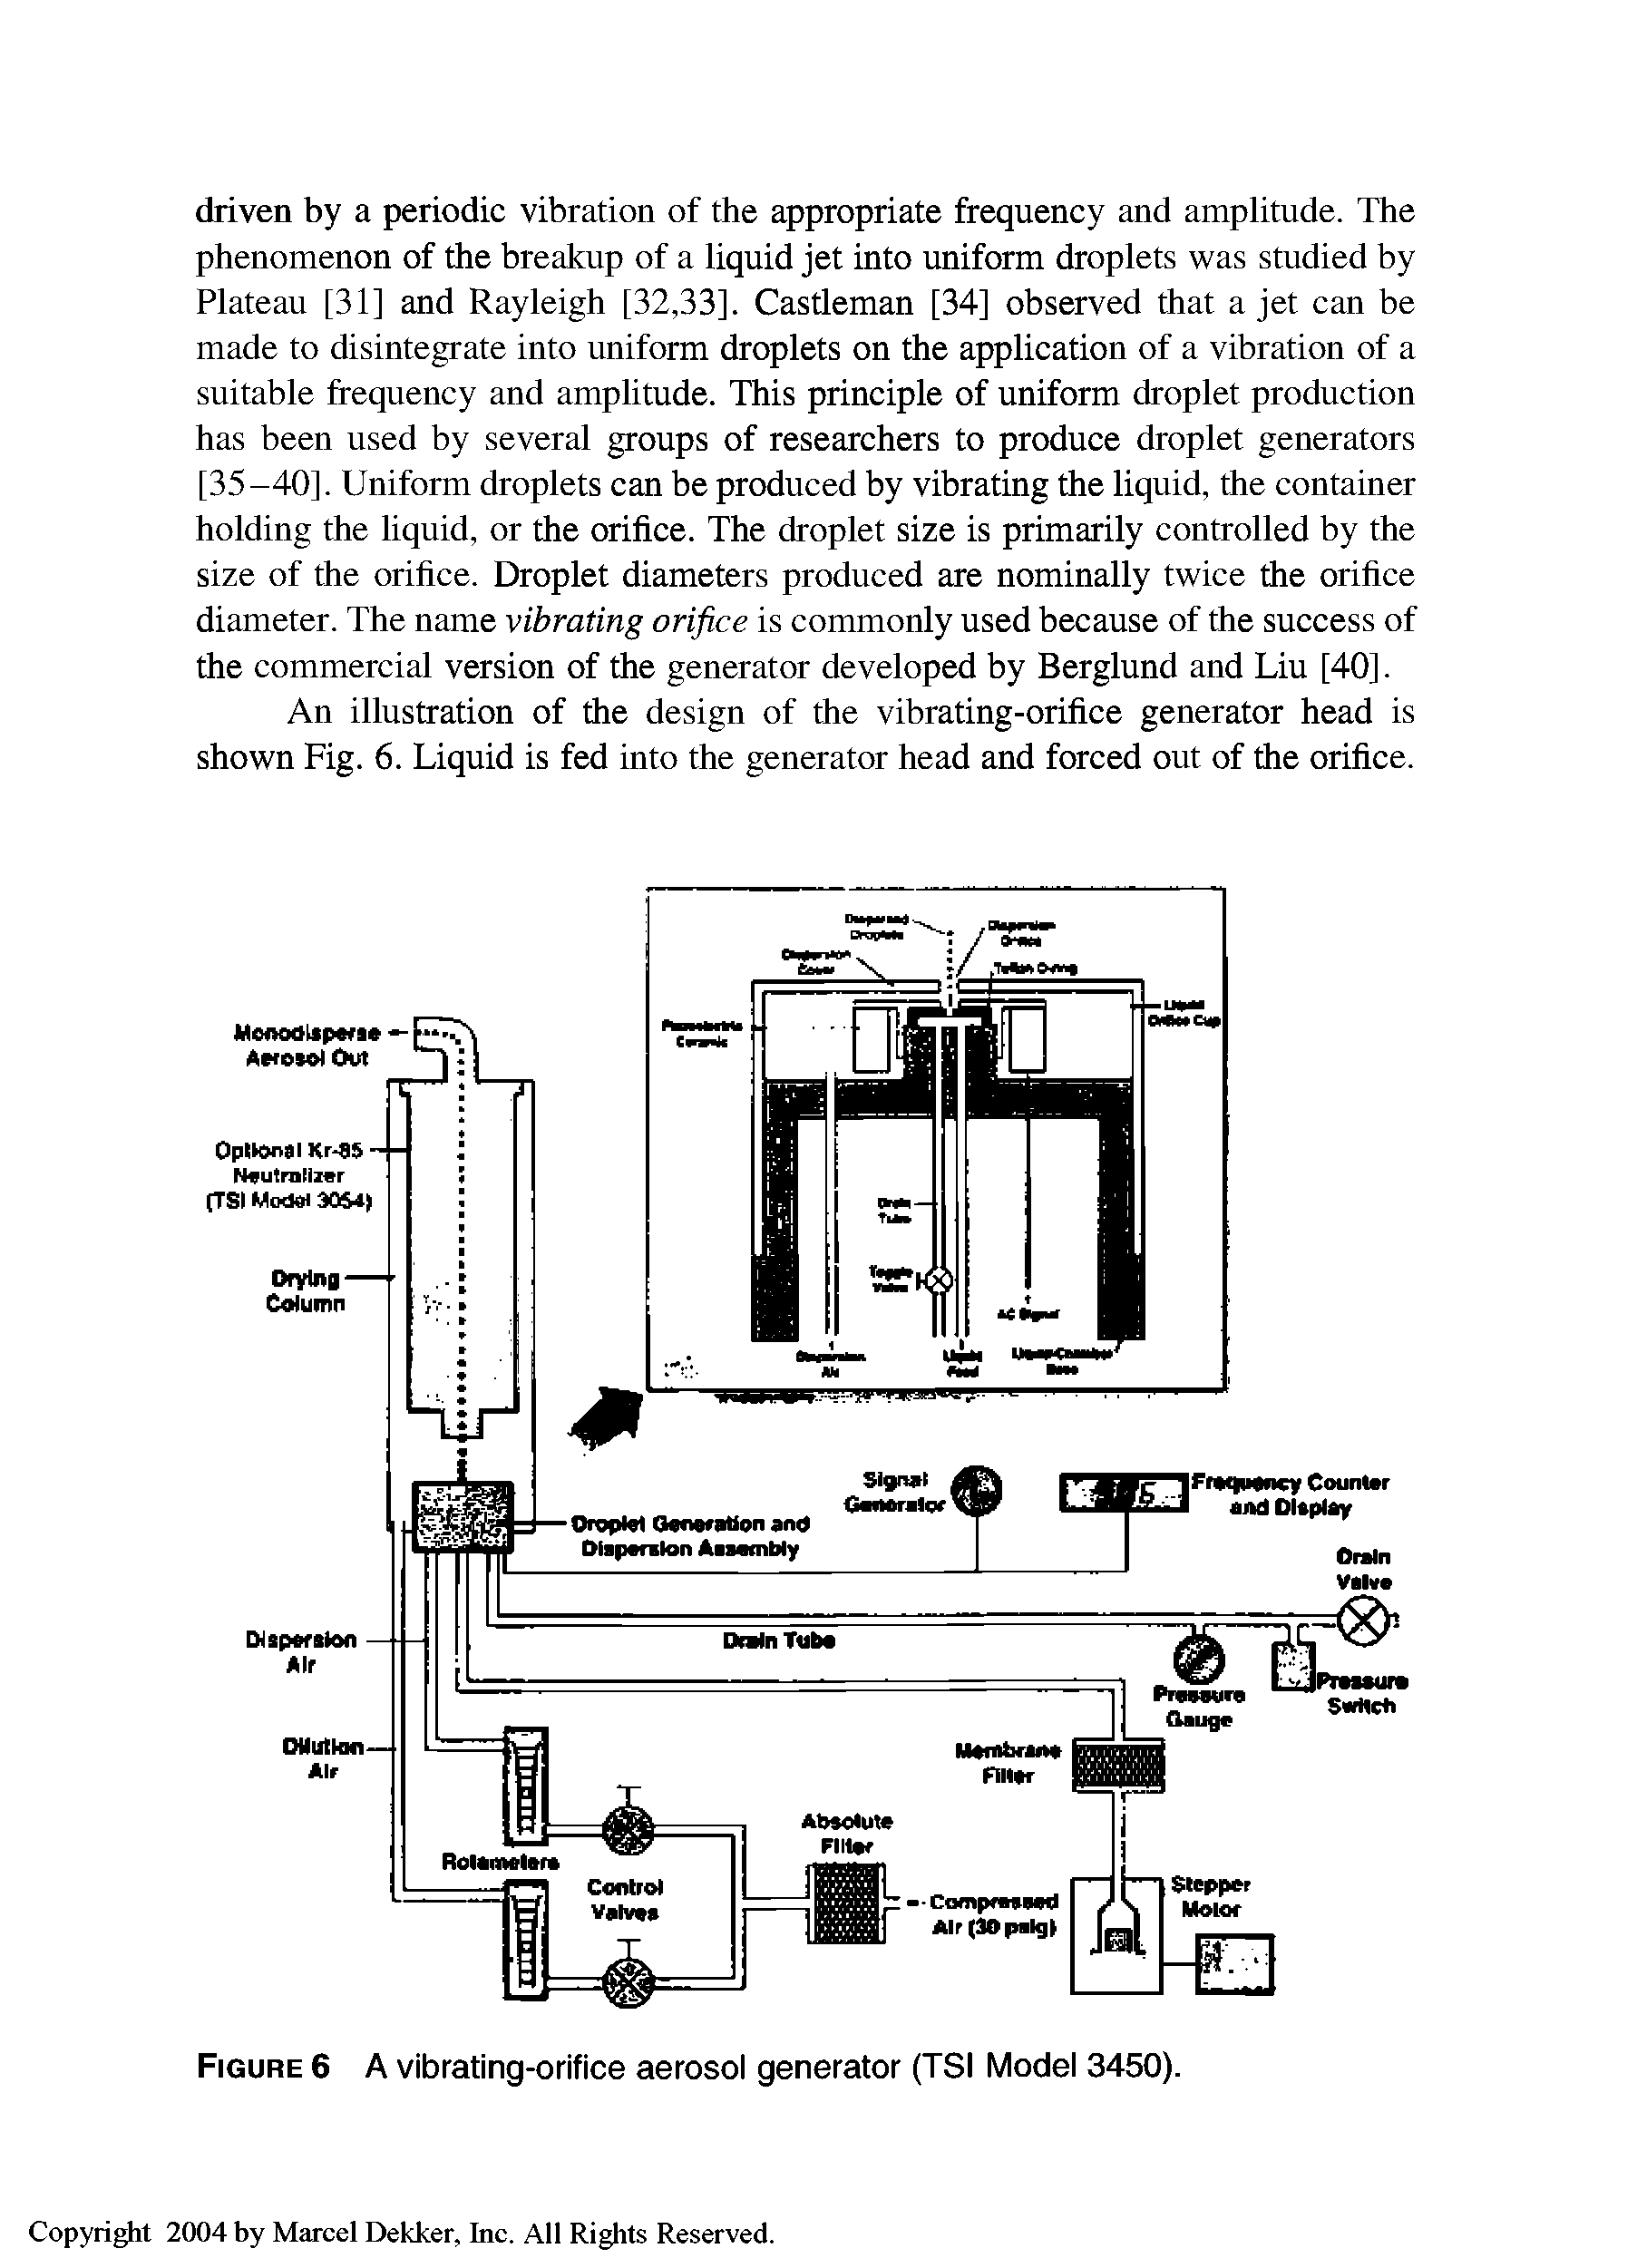 Figure 6 A vibrating-orifice aerosol generator (TSI Model 3450).